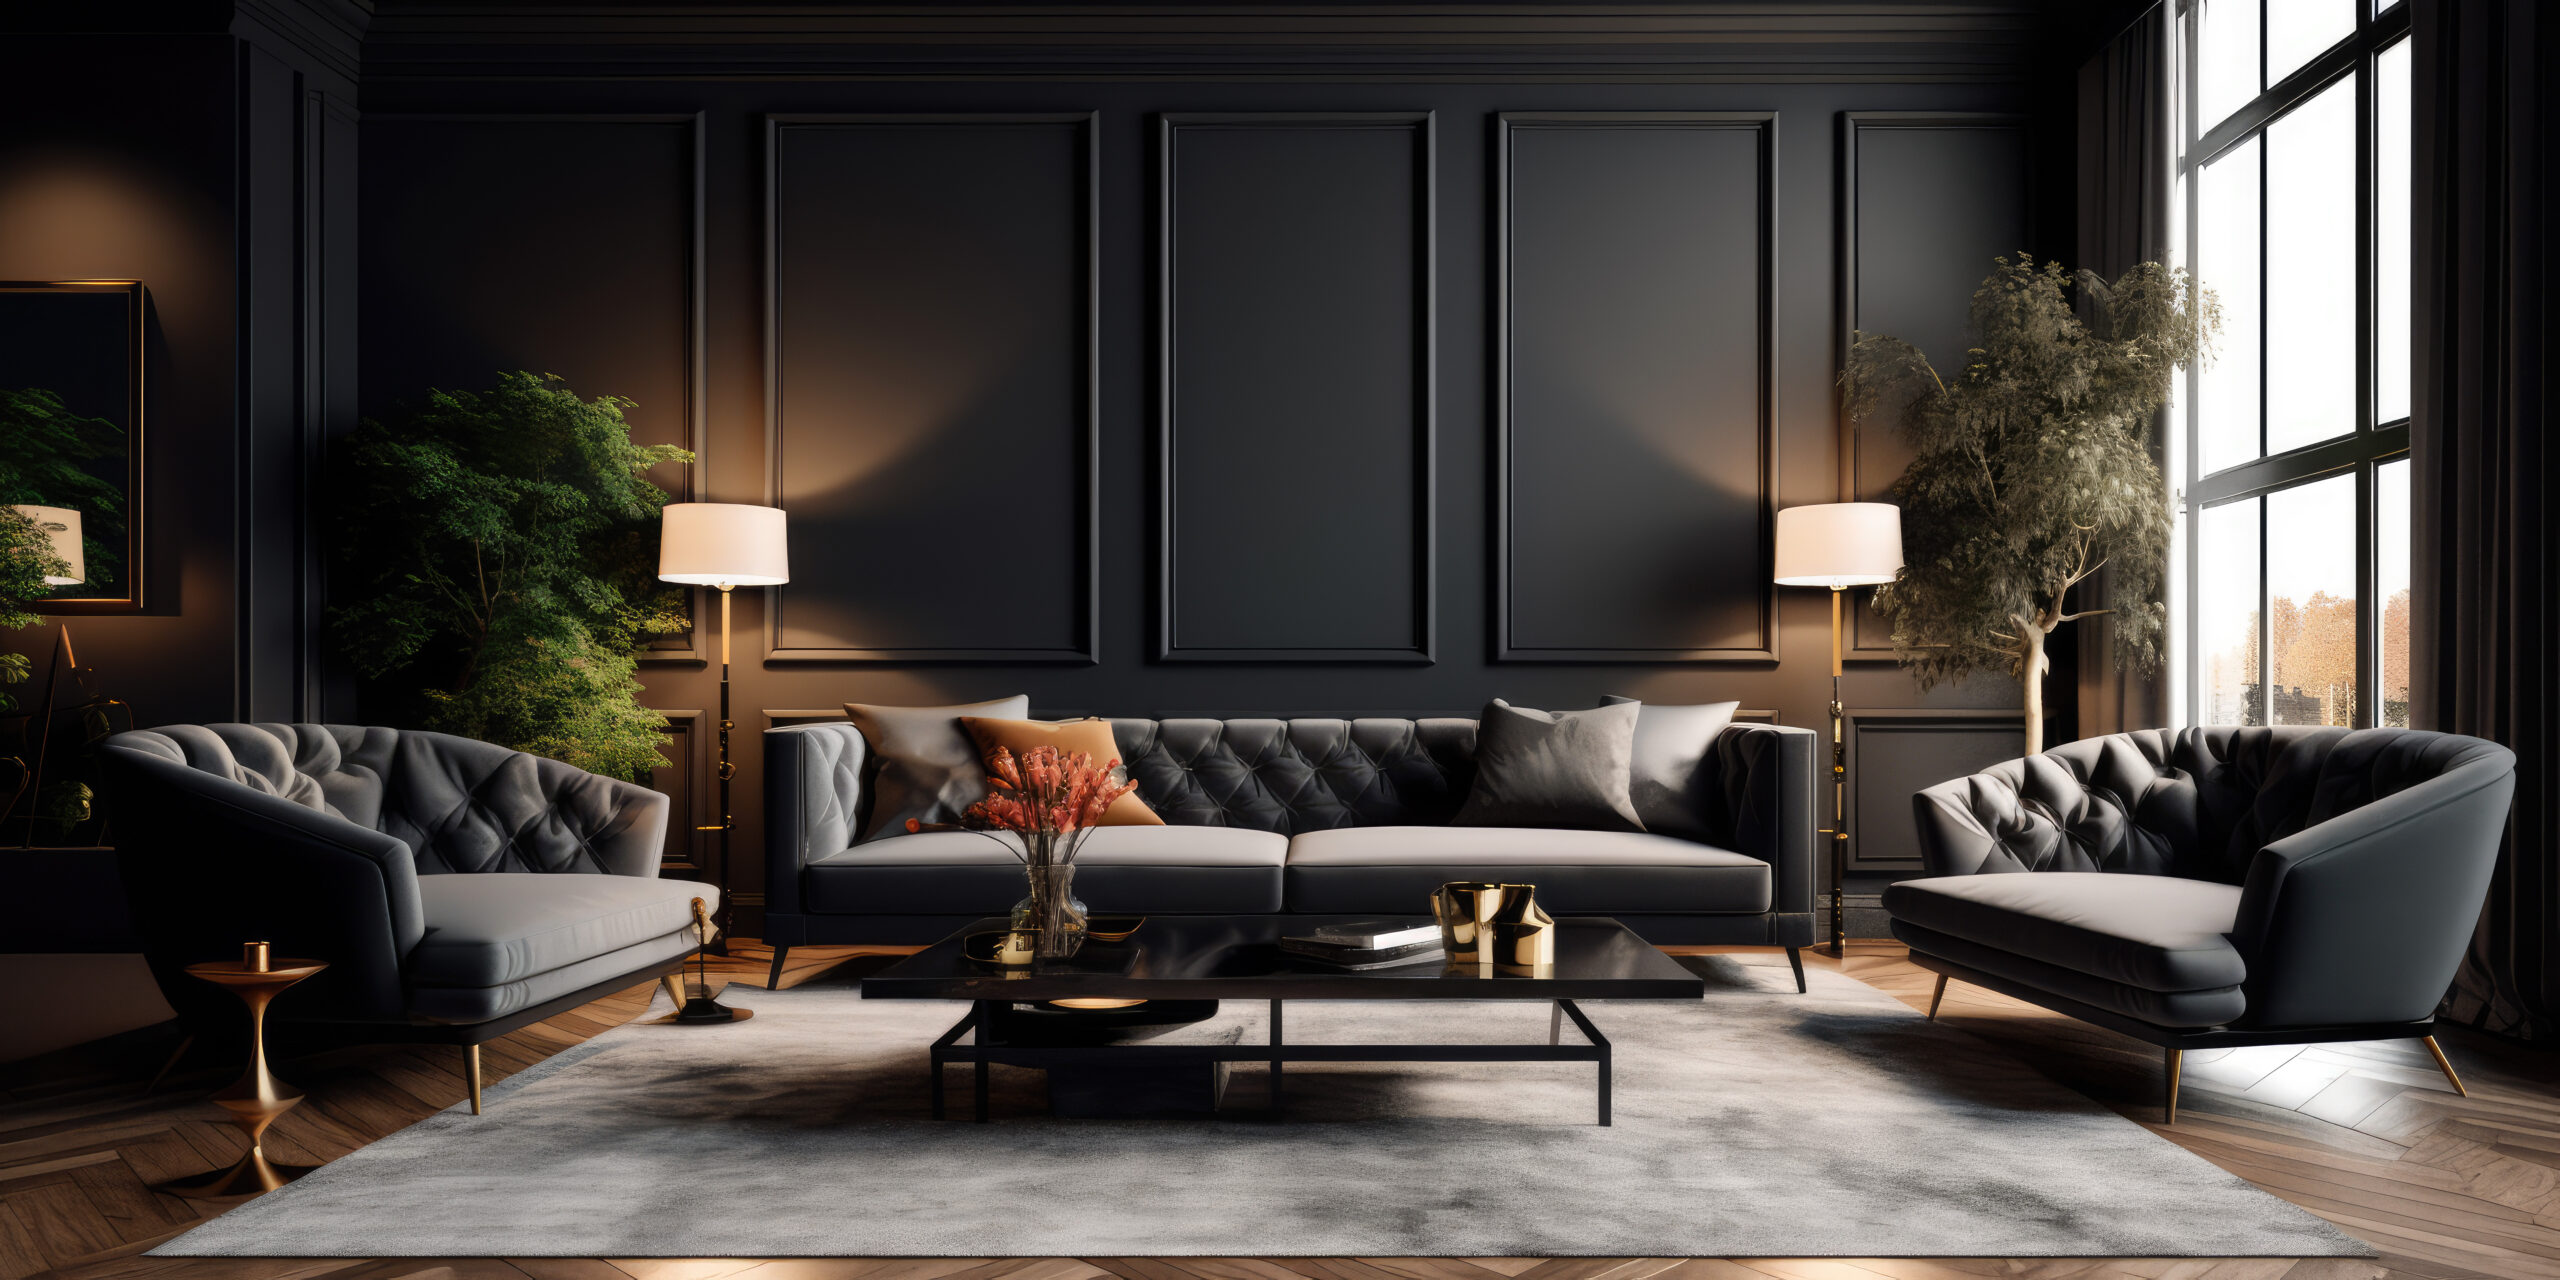 Distinct living room dark interior with luxury gray sofa., indoor design